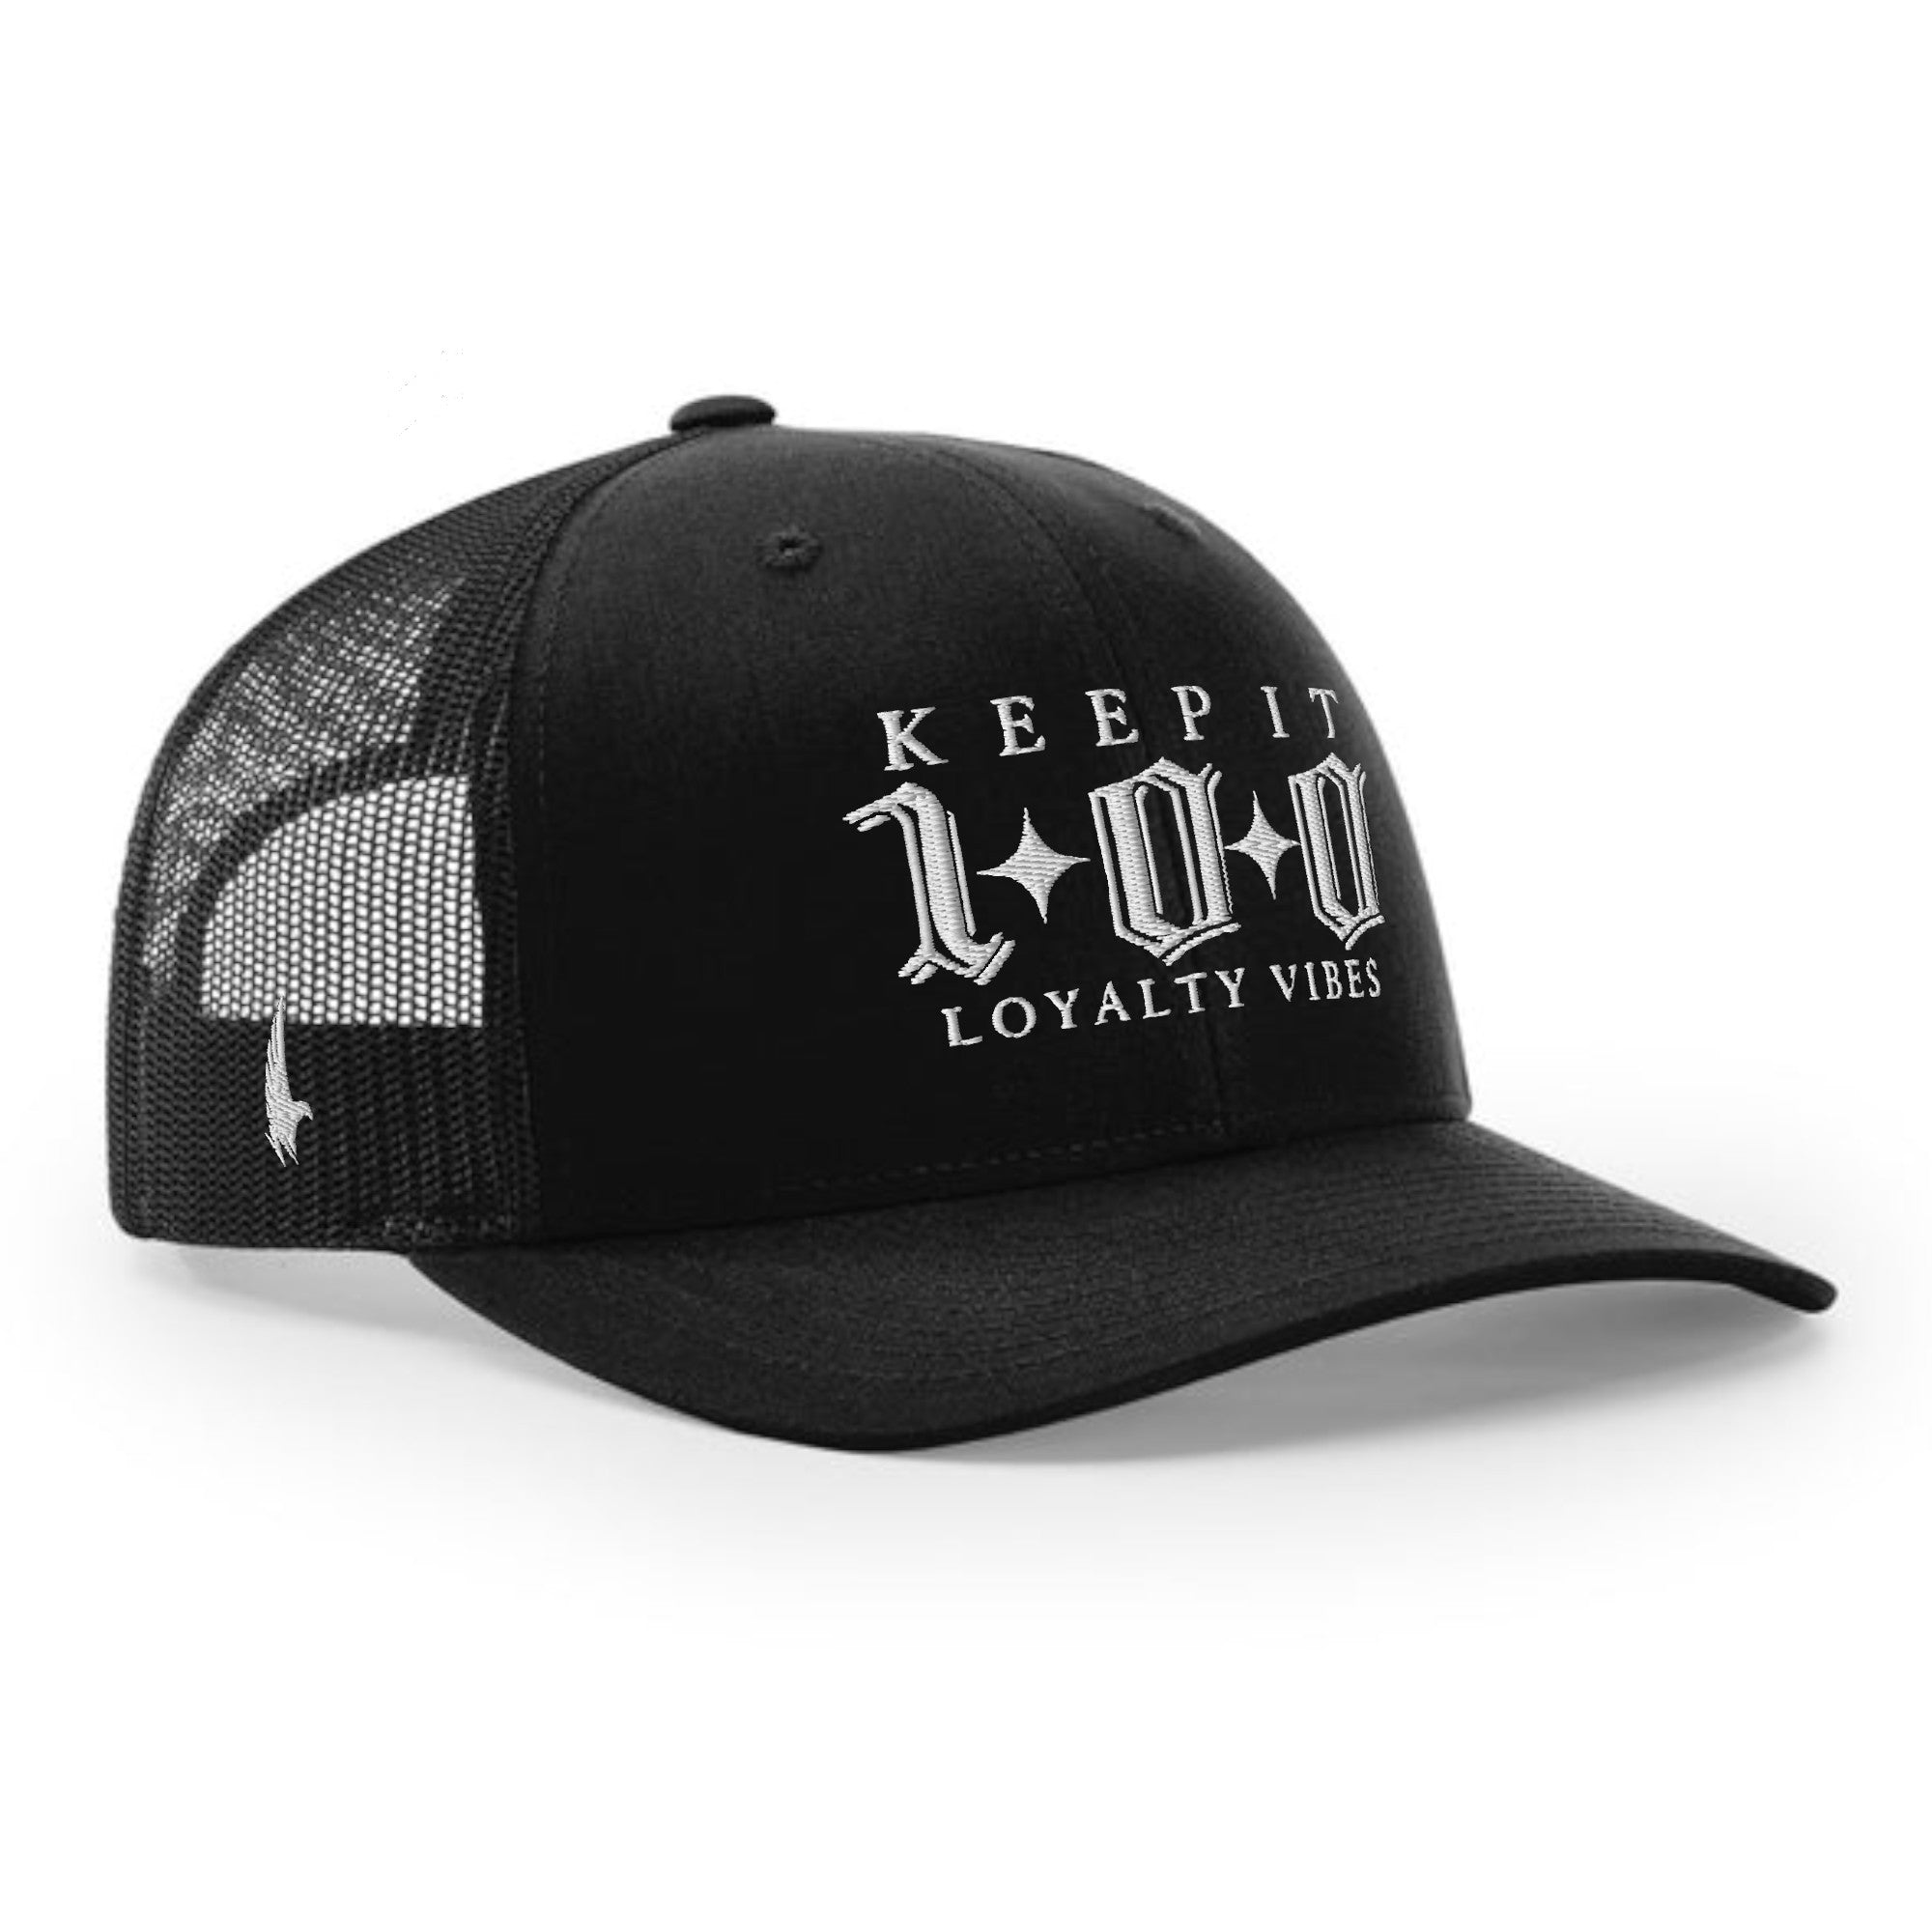 Loyalty Vibes Keep It 100 Trucker Hat Black OS - Loyalty Vibes